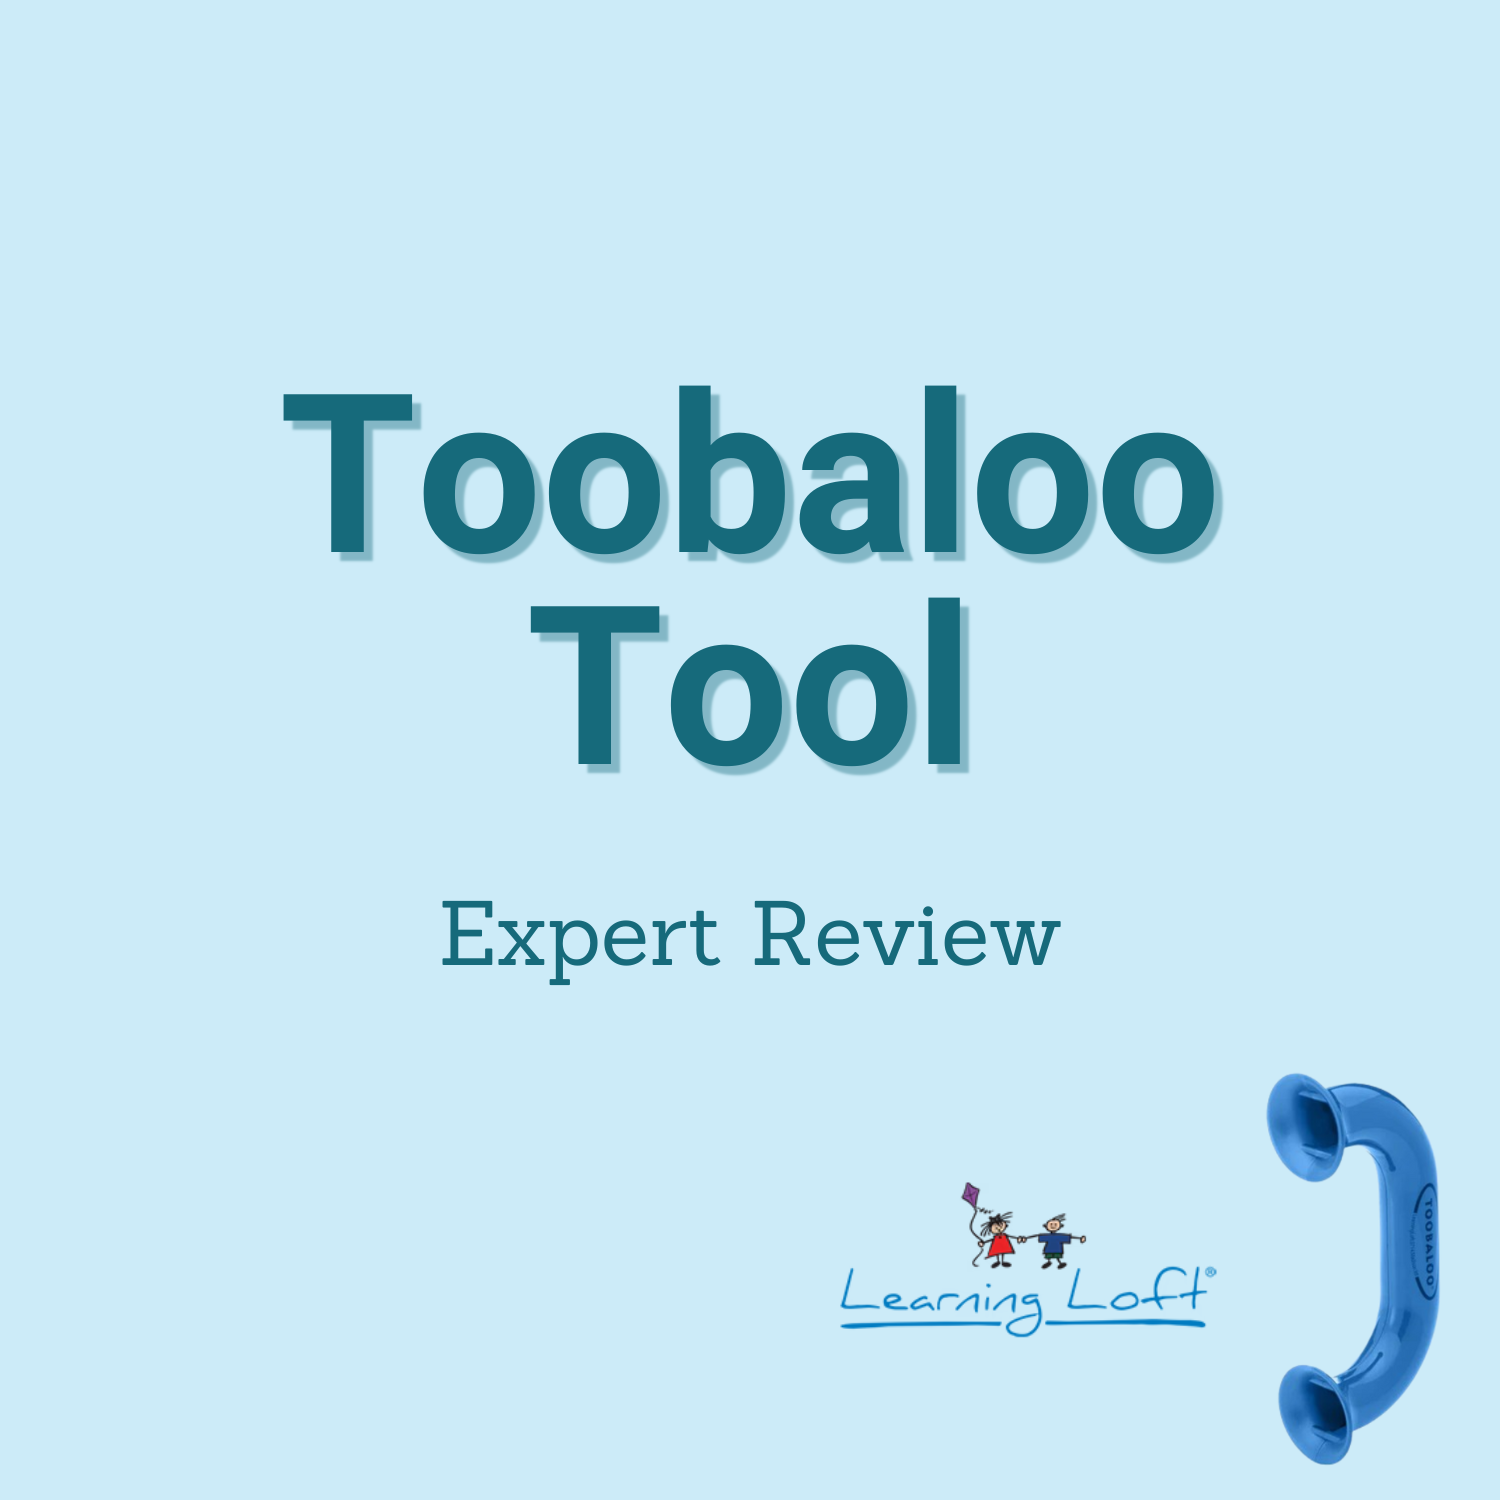 toobaloo tool expert review